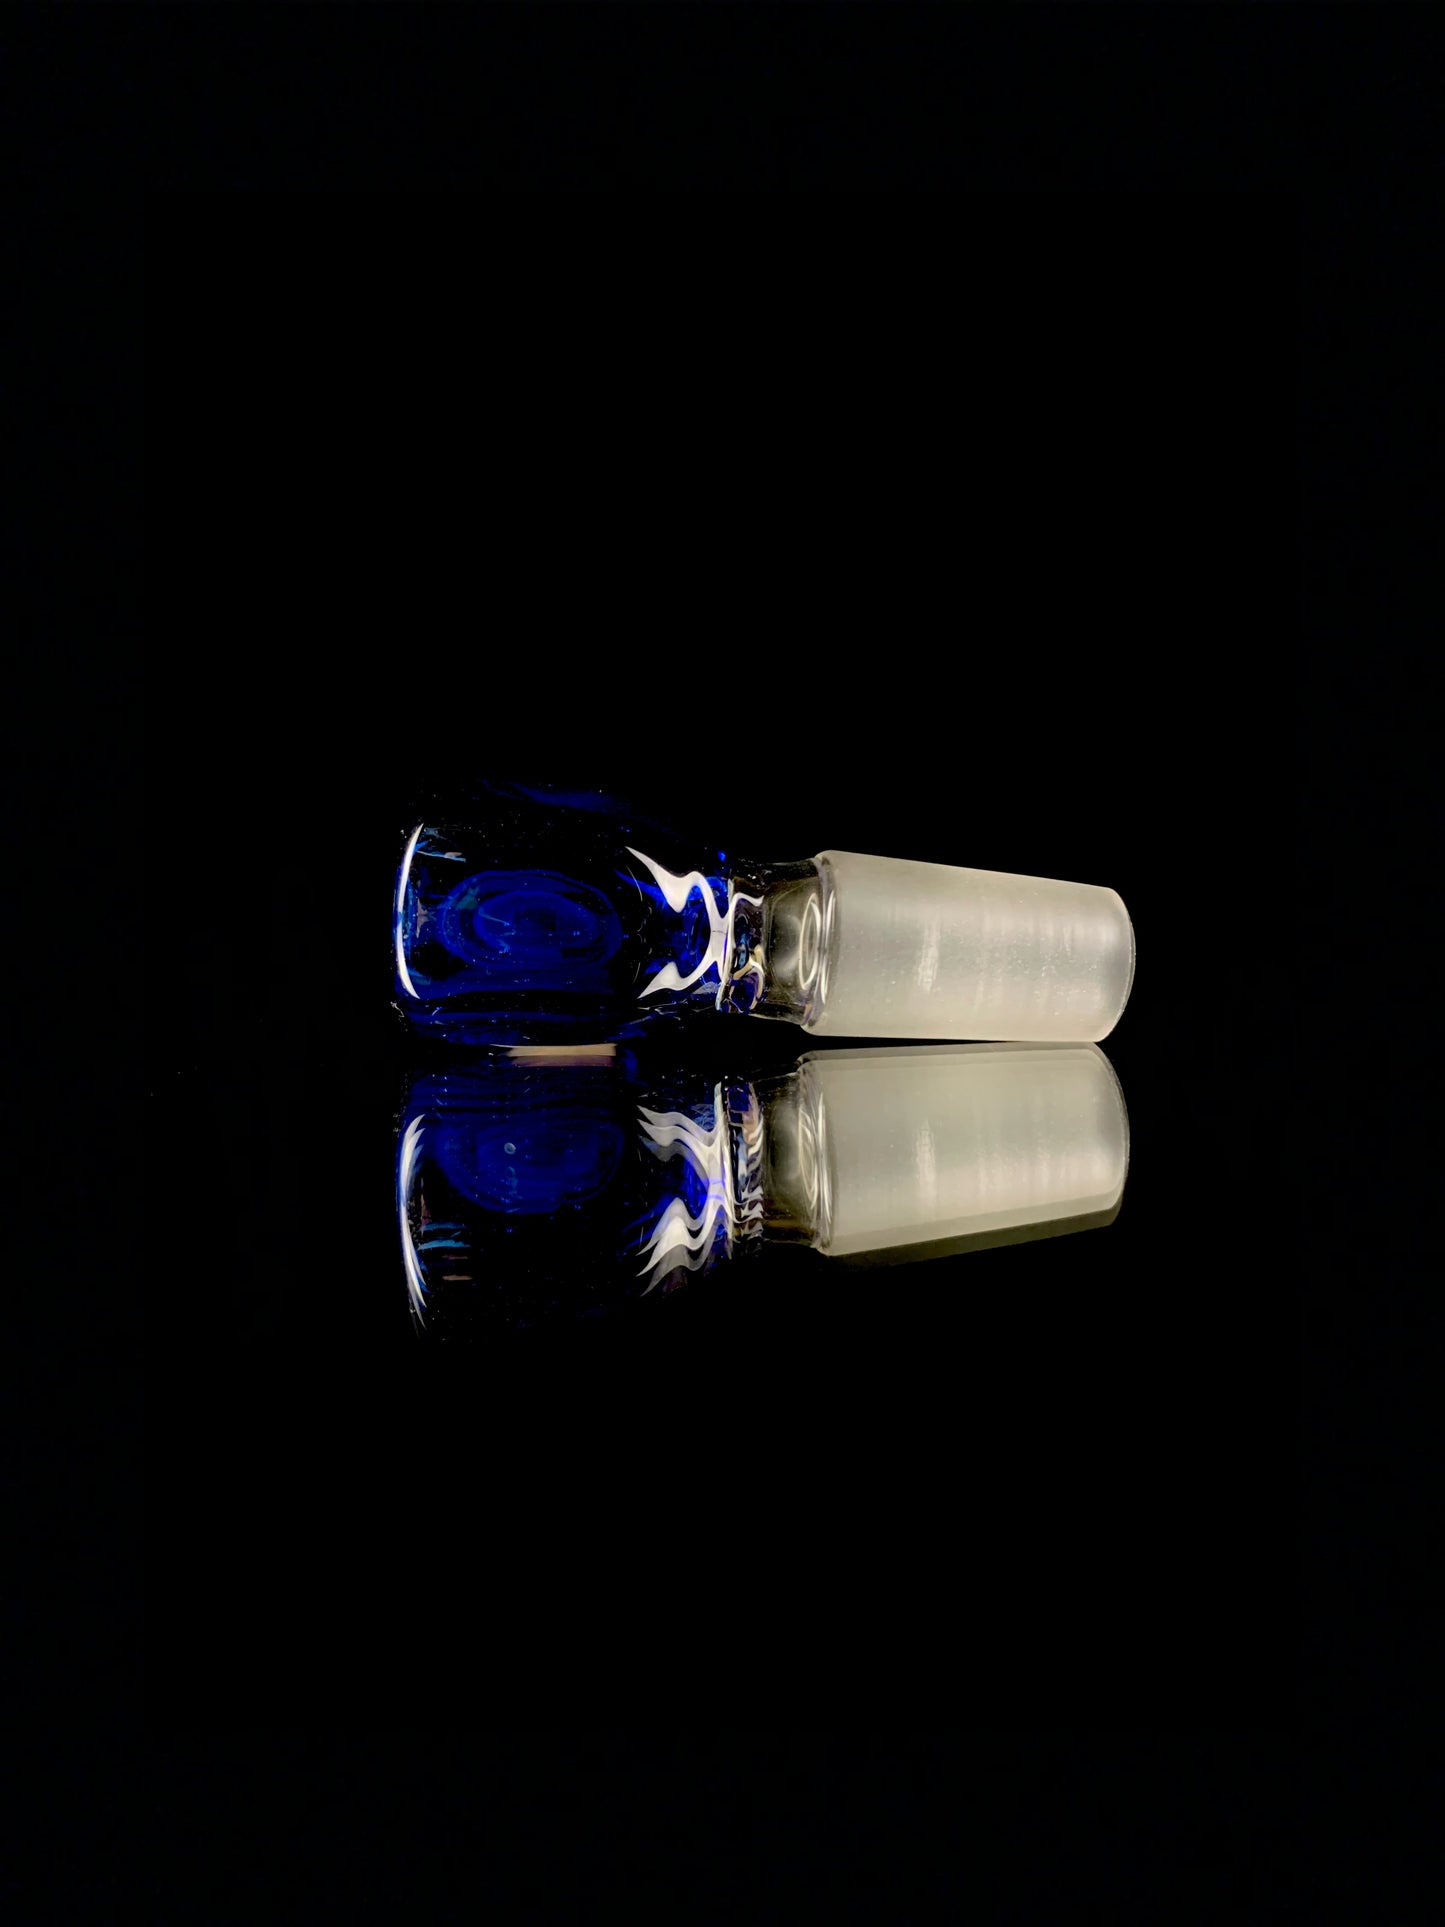 14mm light cobalt slide by Higgs Glass